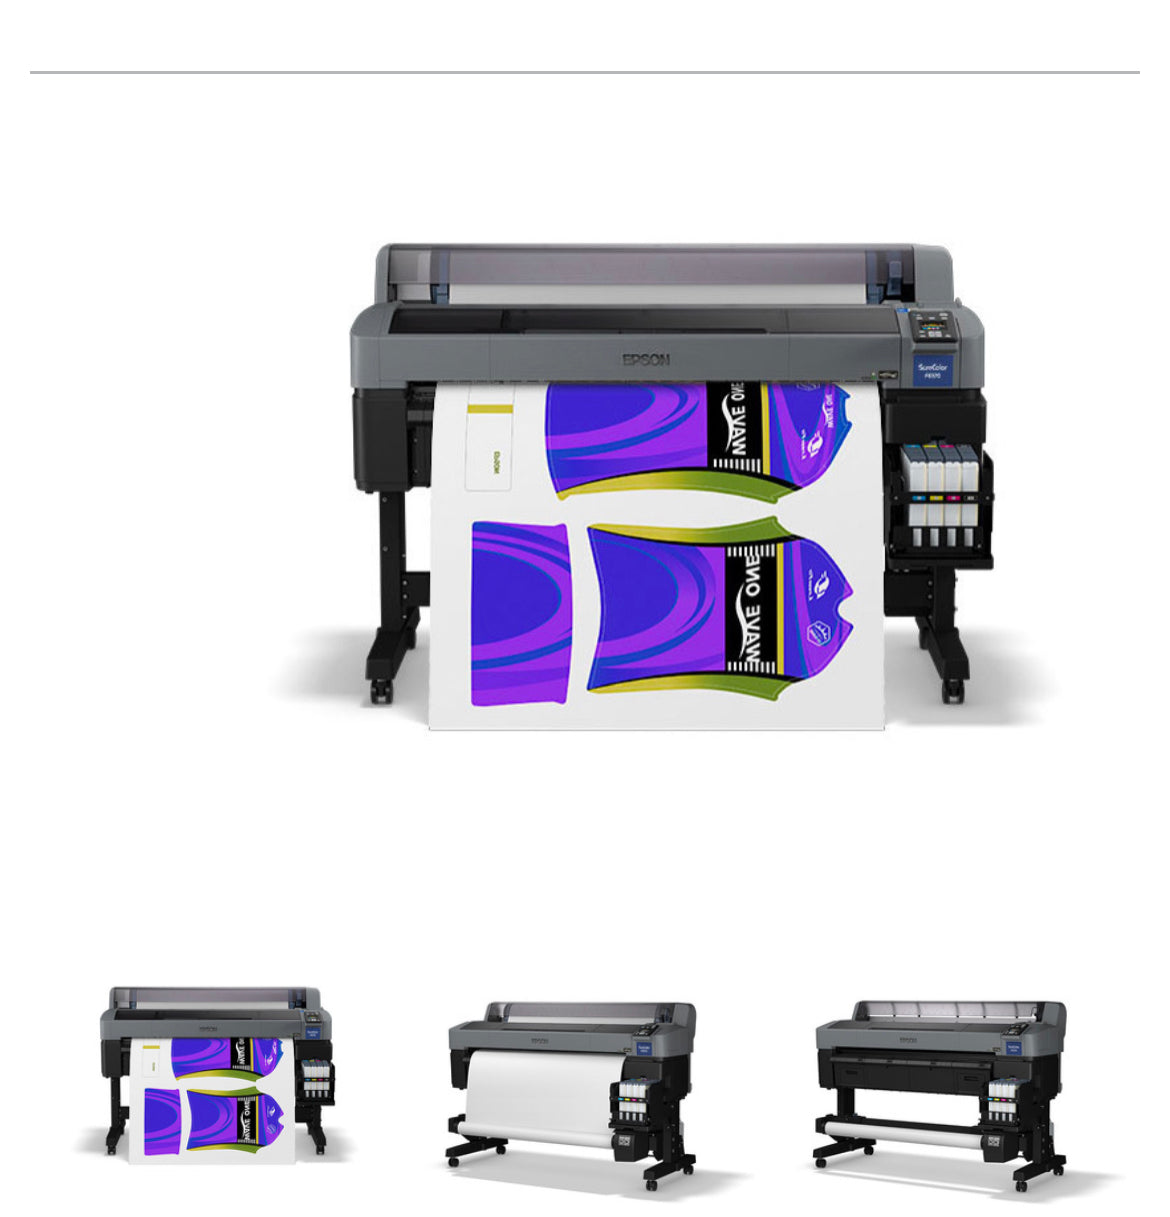 Surecolor F6370 44” Sublimation Standard Edition Printer